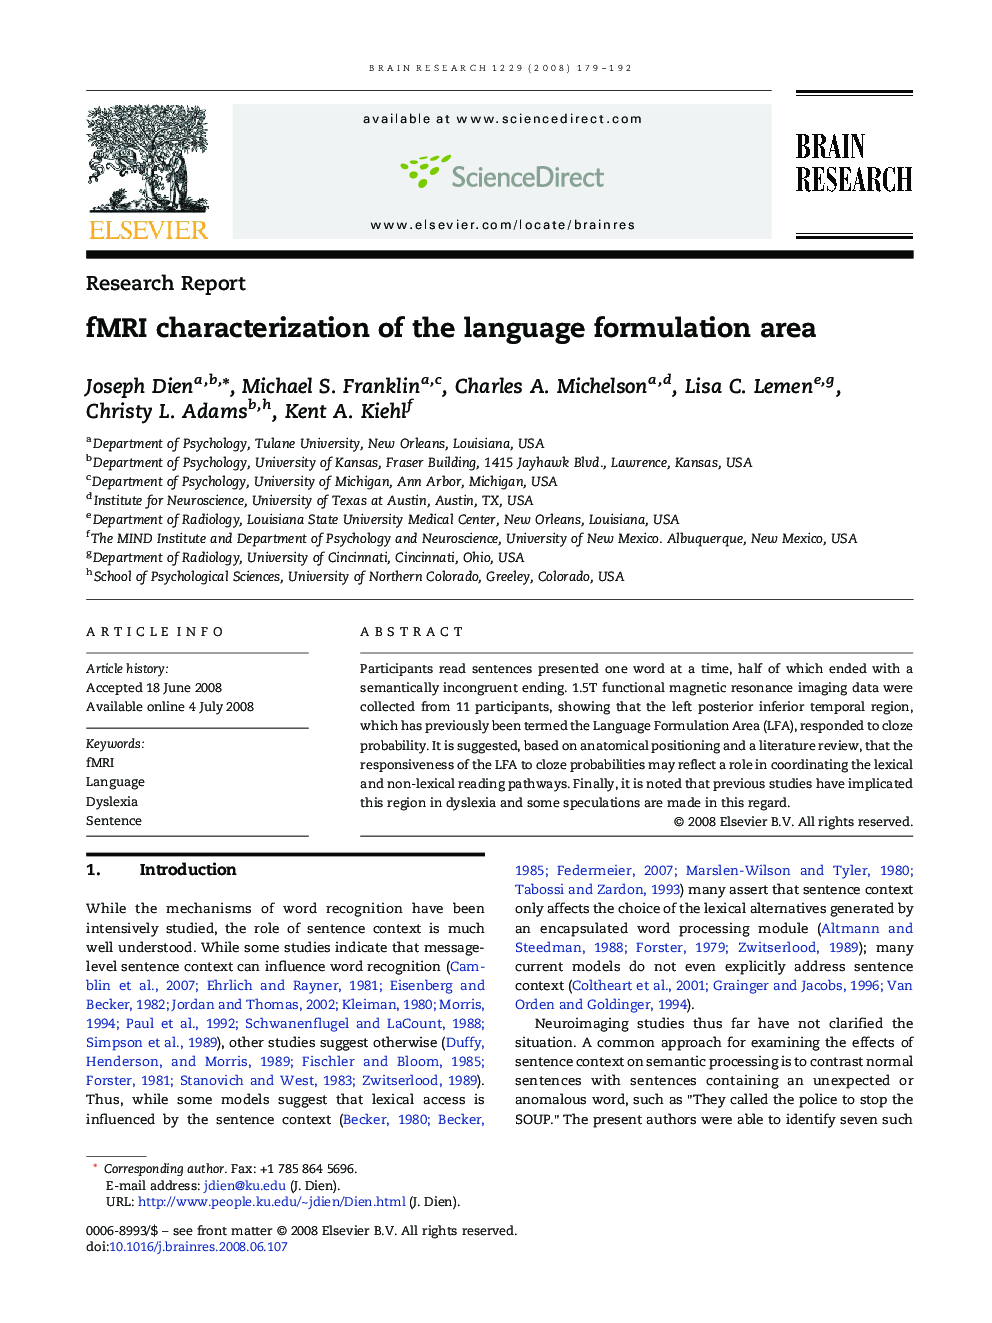 fMRI characterization of the language formulation area